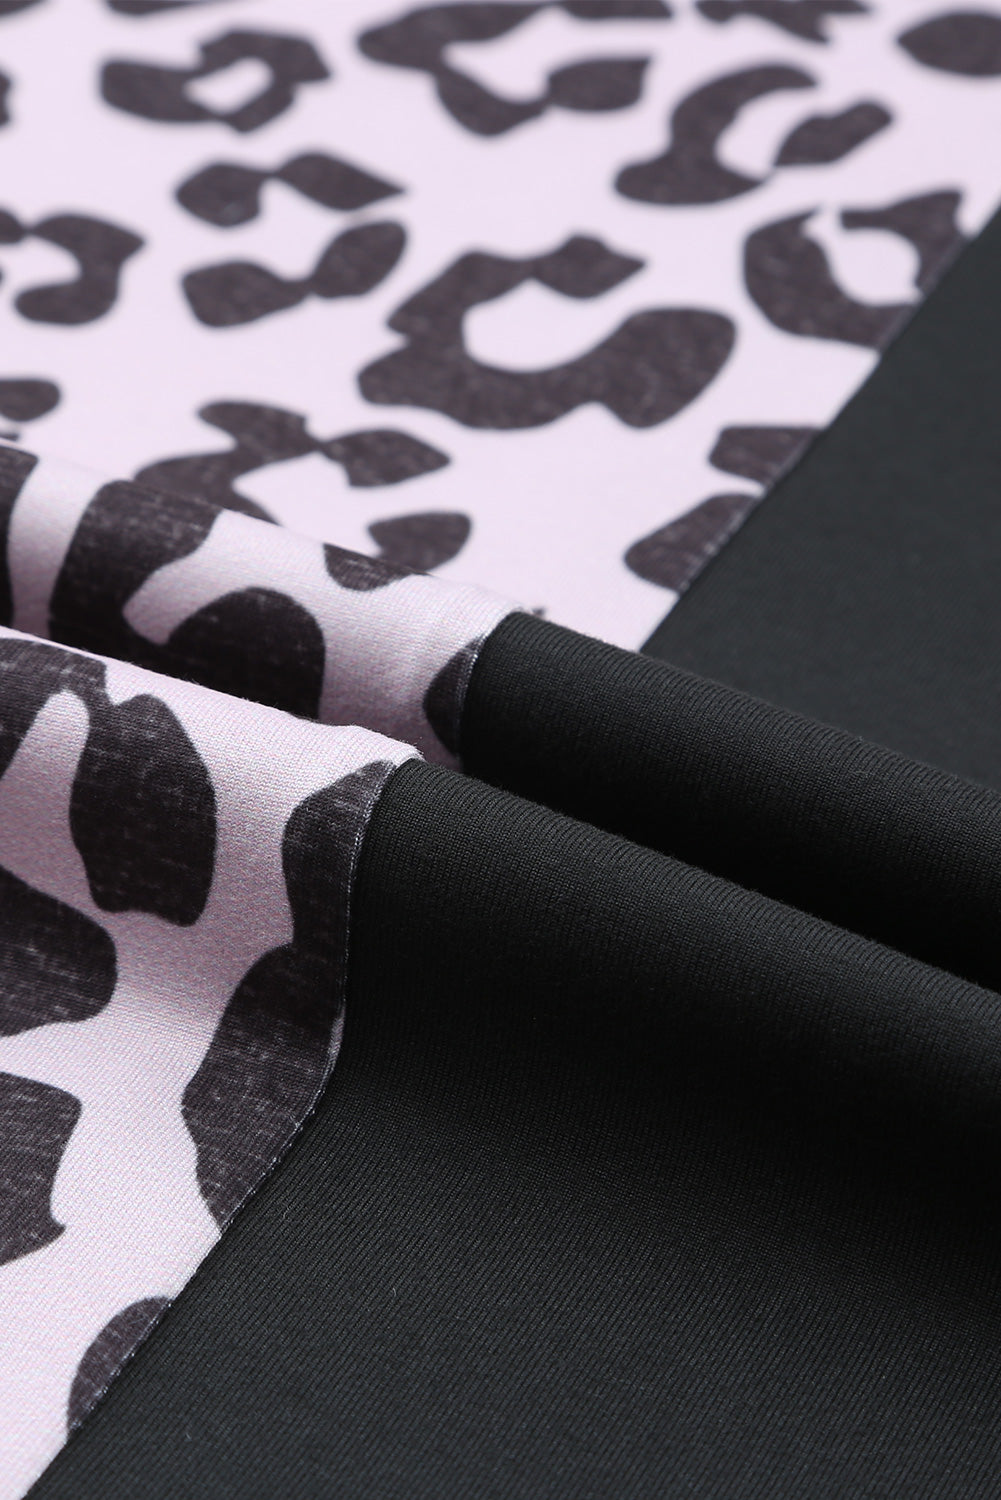 Black Half Leopard Patchwork Short Sleeves Top